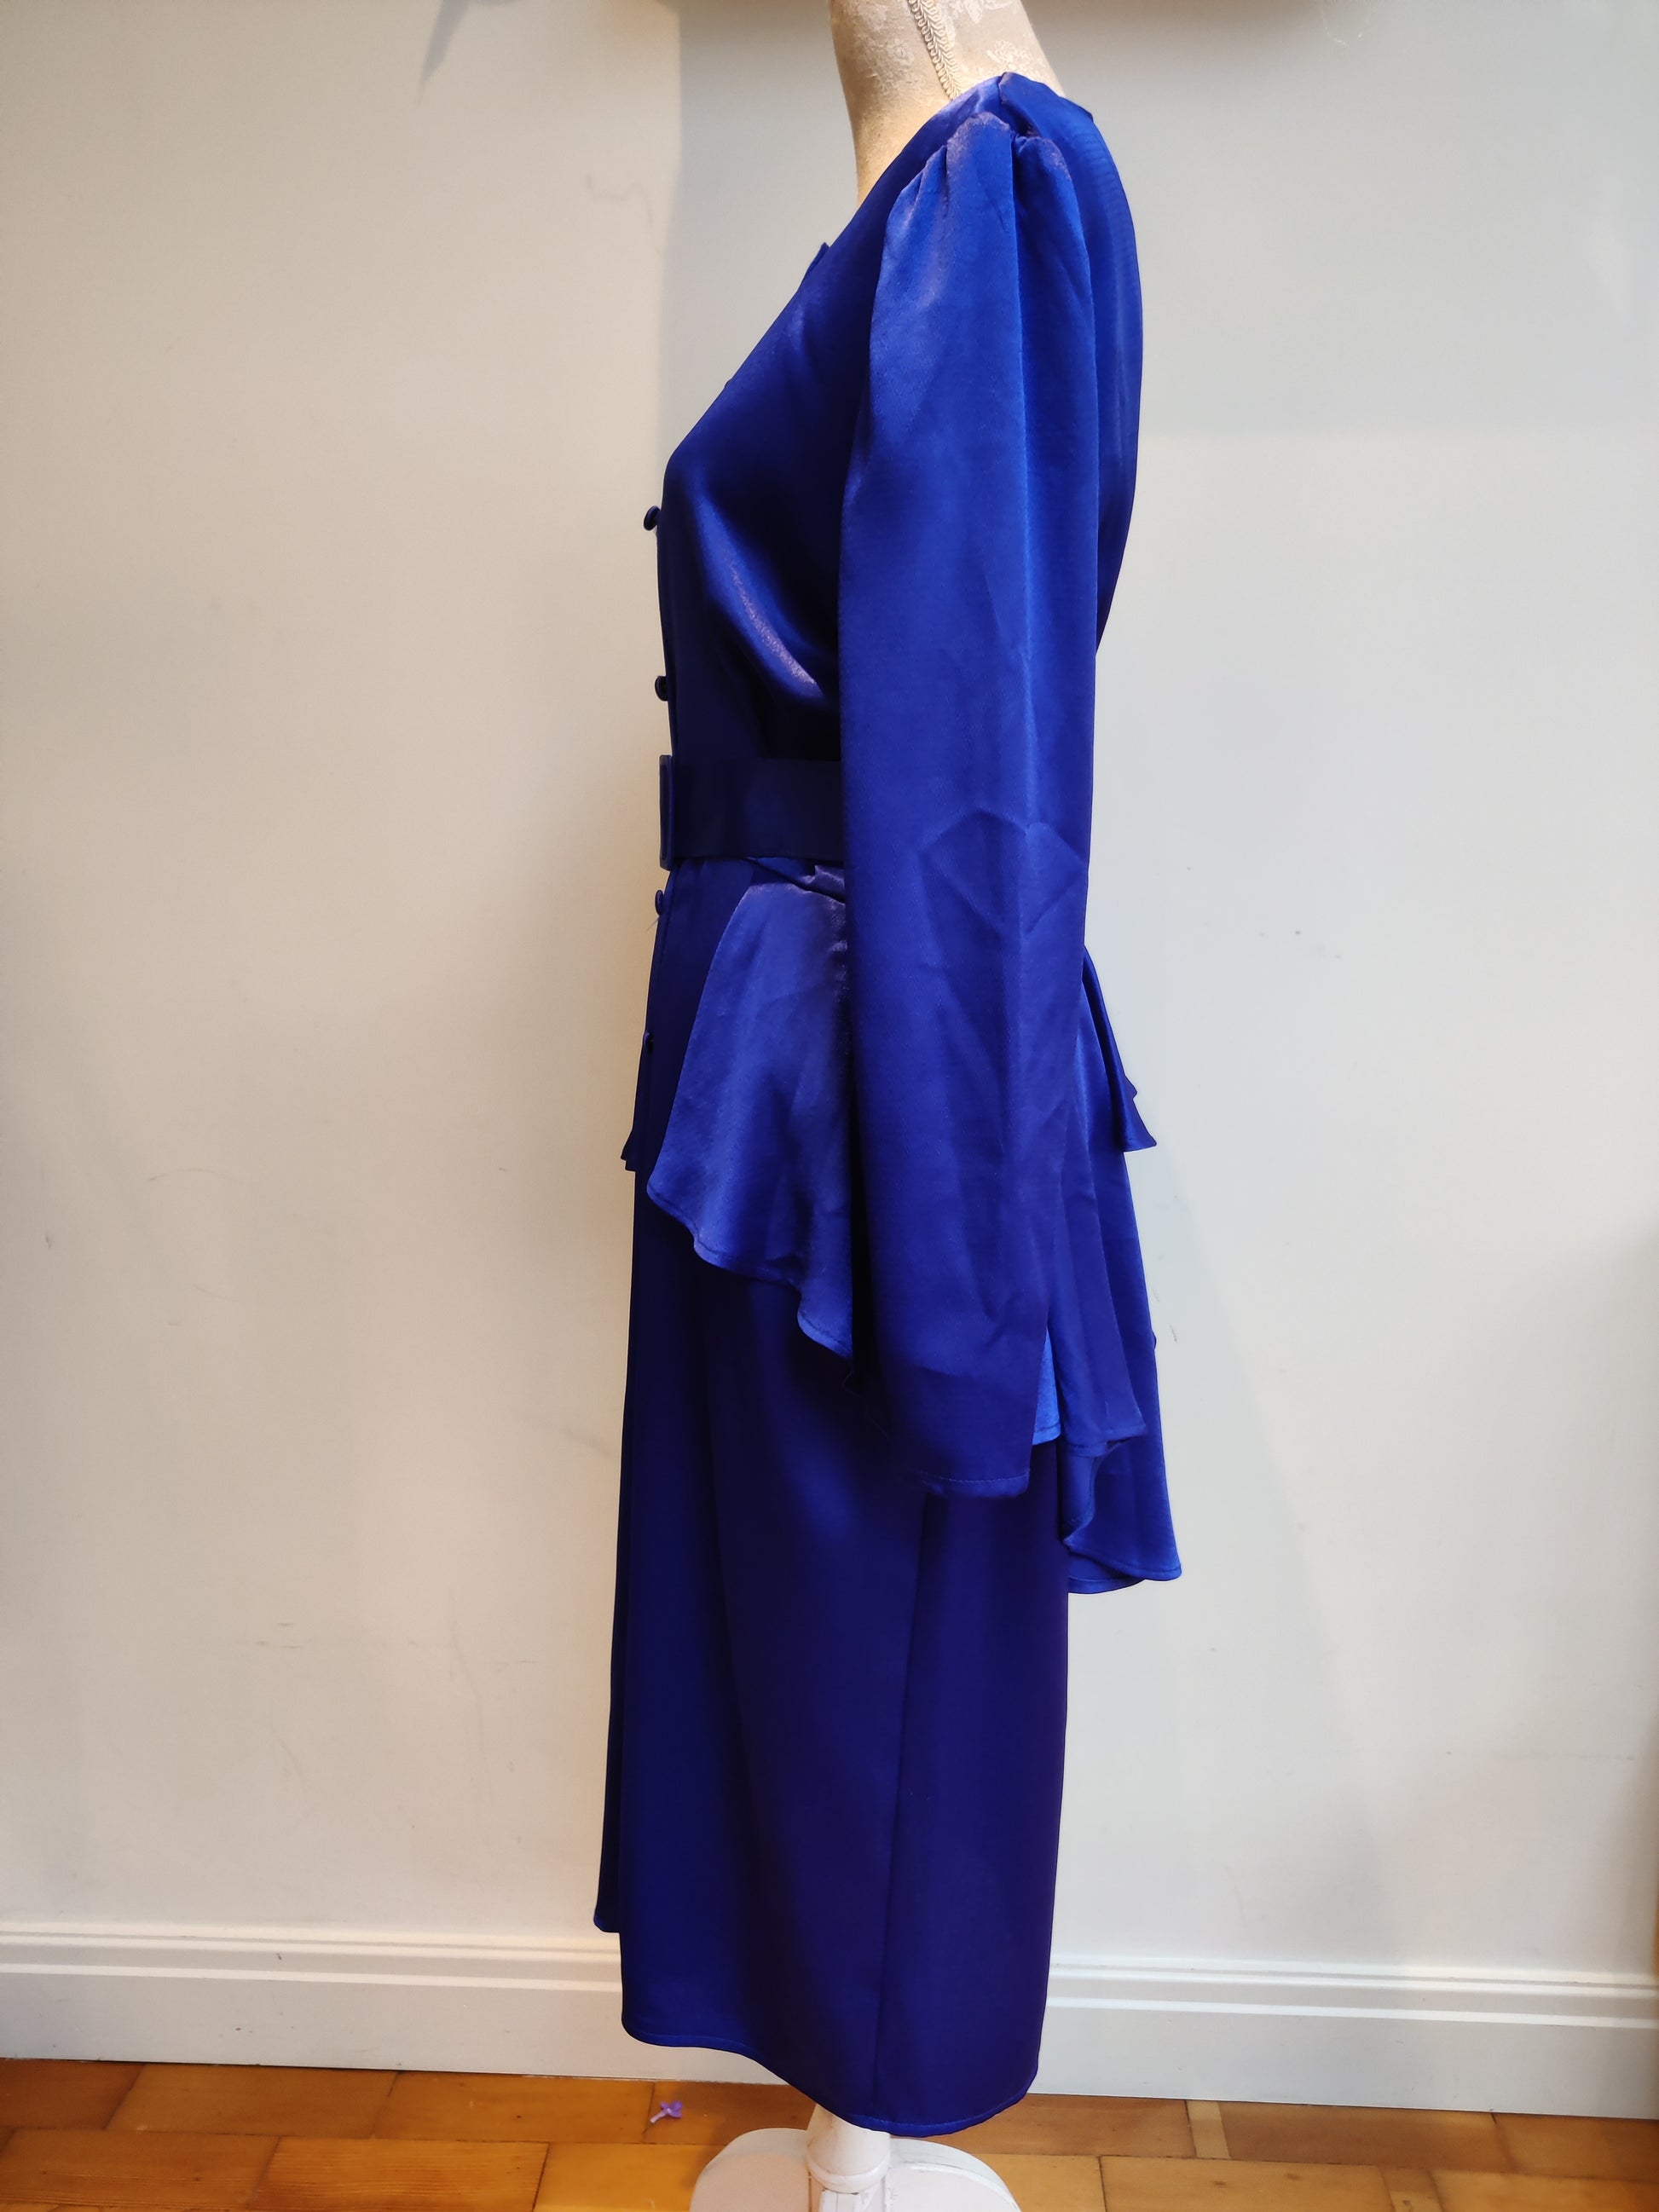 Amazing bright blue vintage midi evening dress size 12.